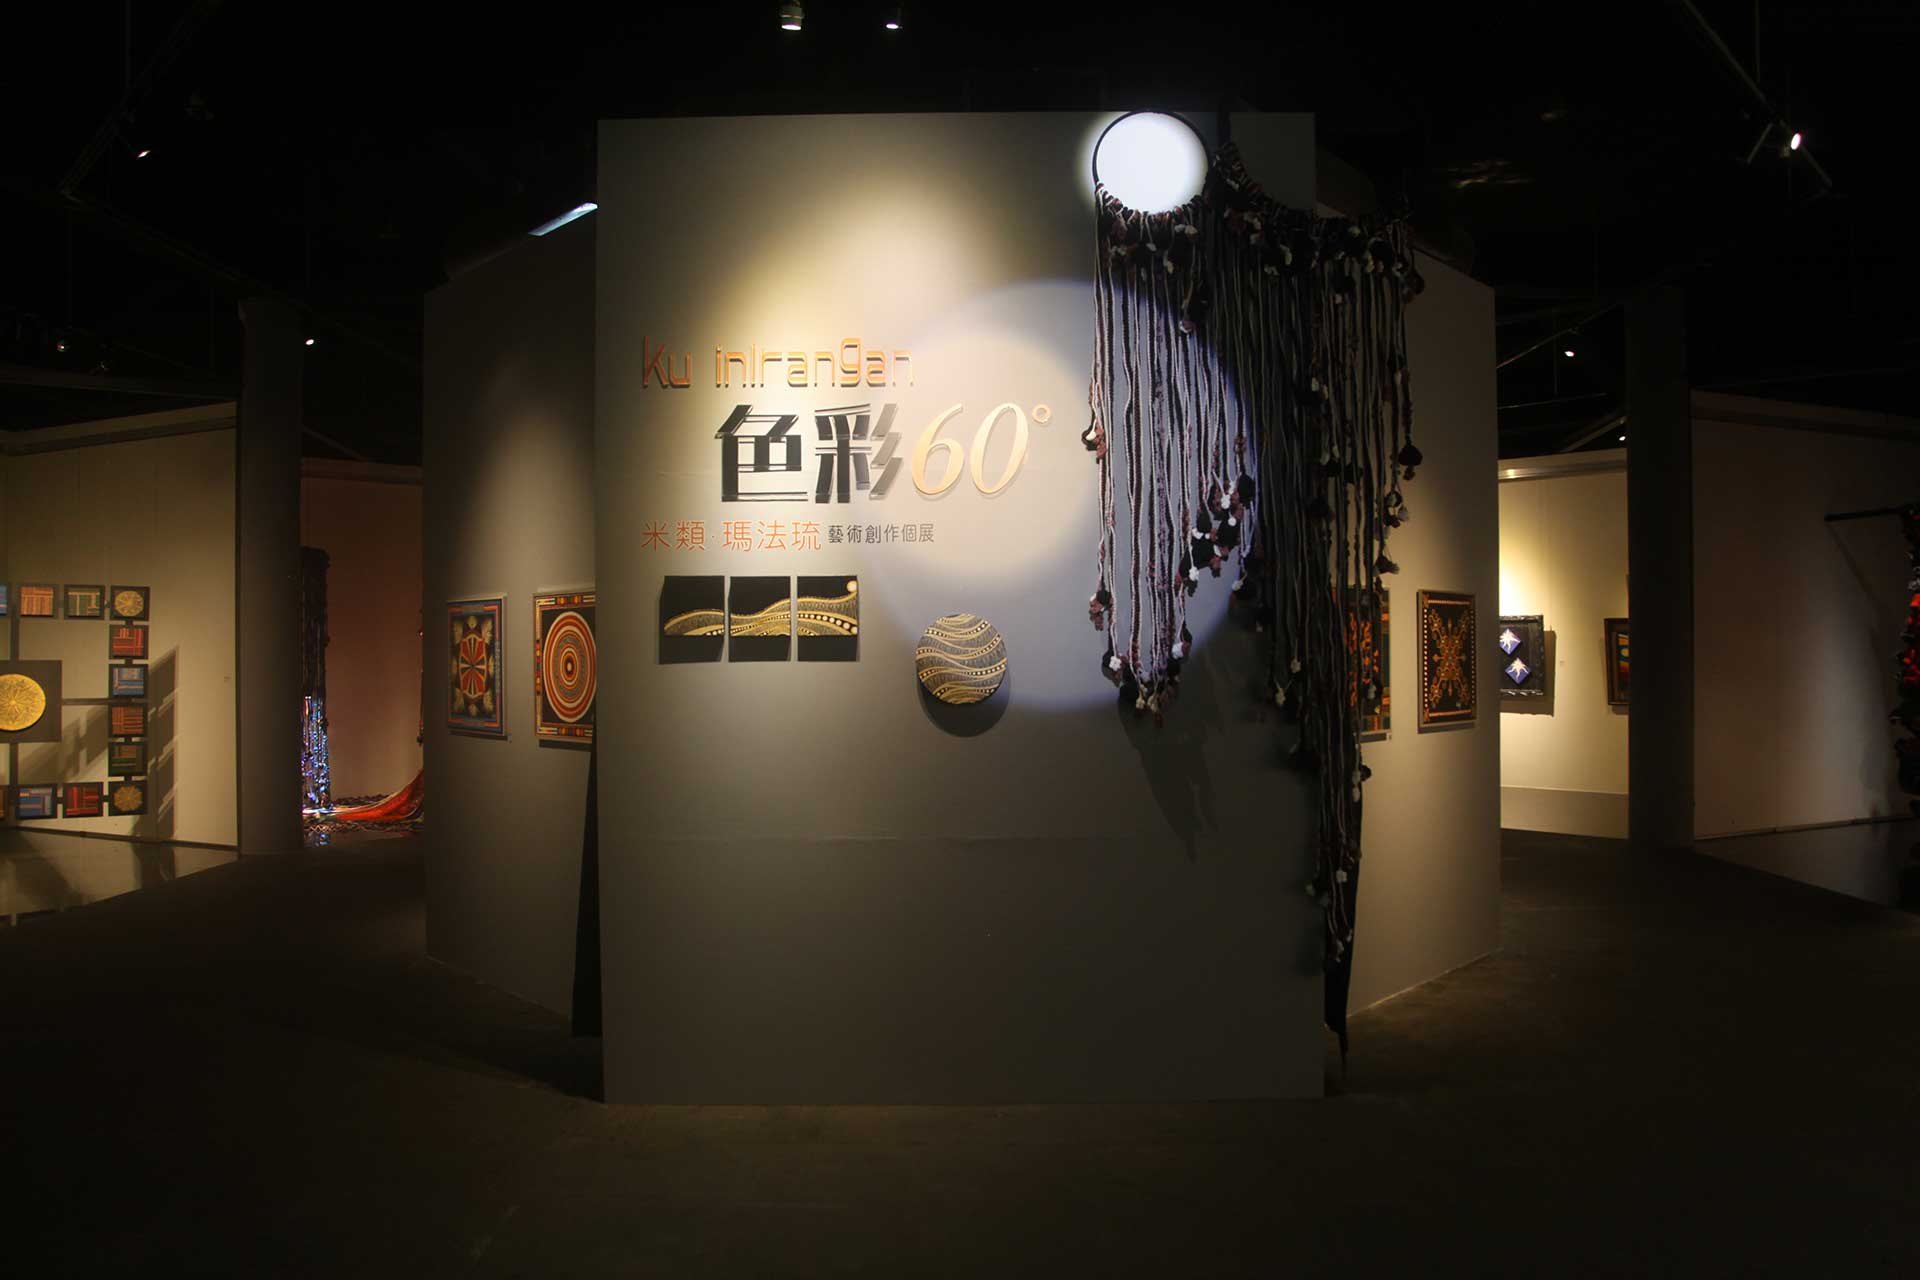 Ku inlrangan 色彩60°－米類・瑪法琉藝術創作個展